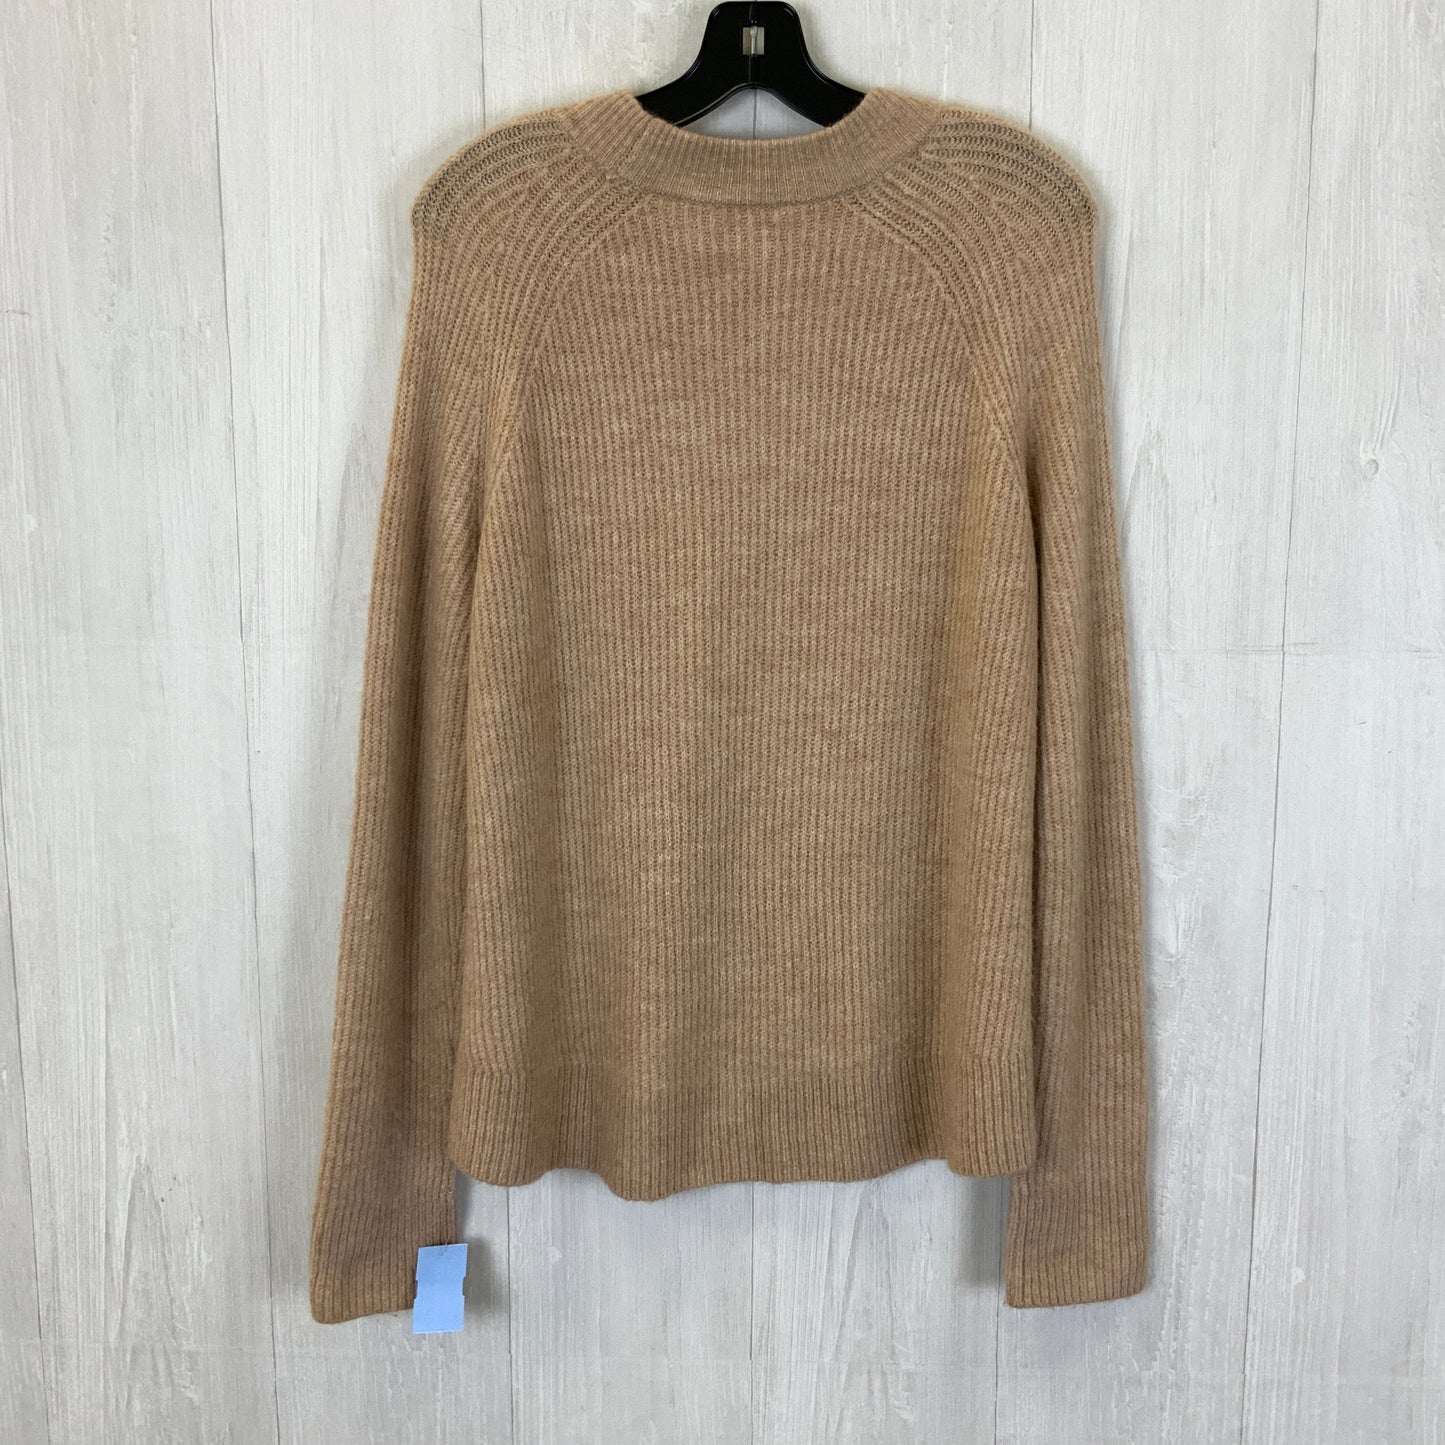 Tan  Sweater H&m, Size L